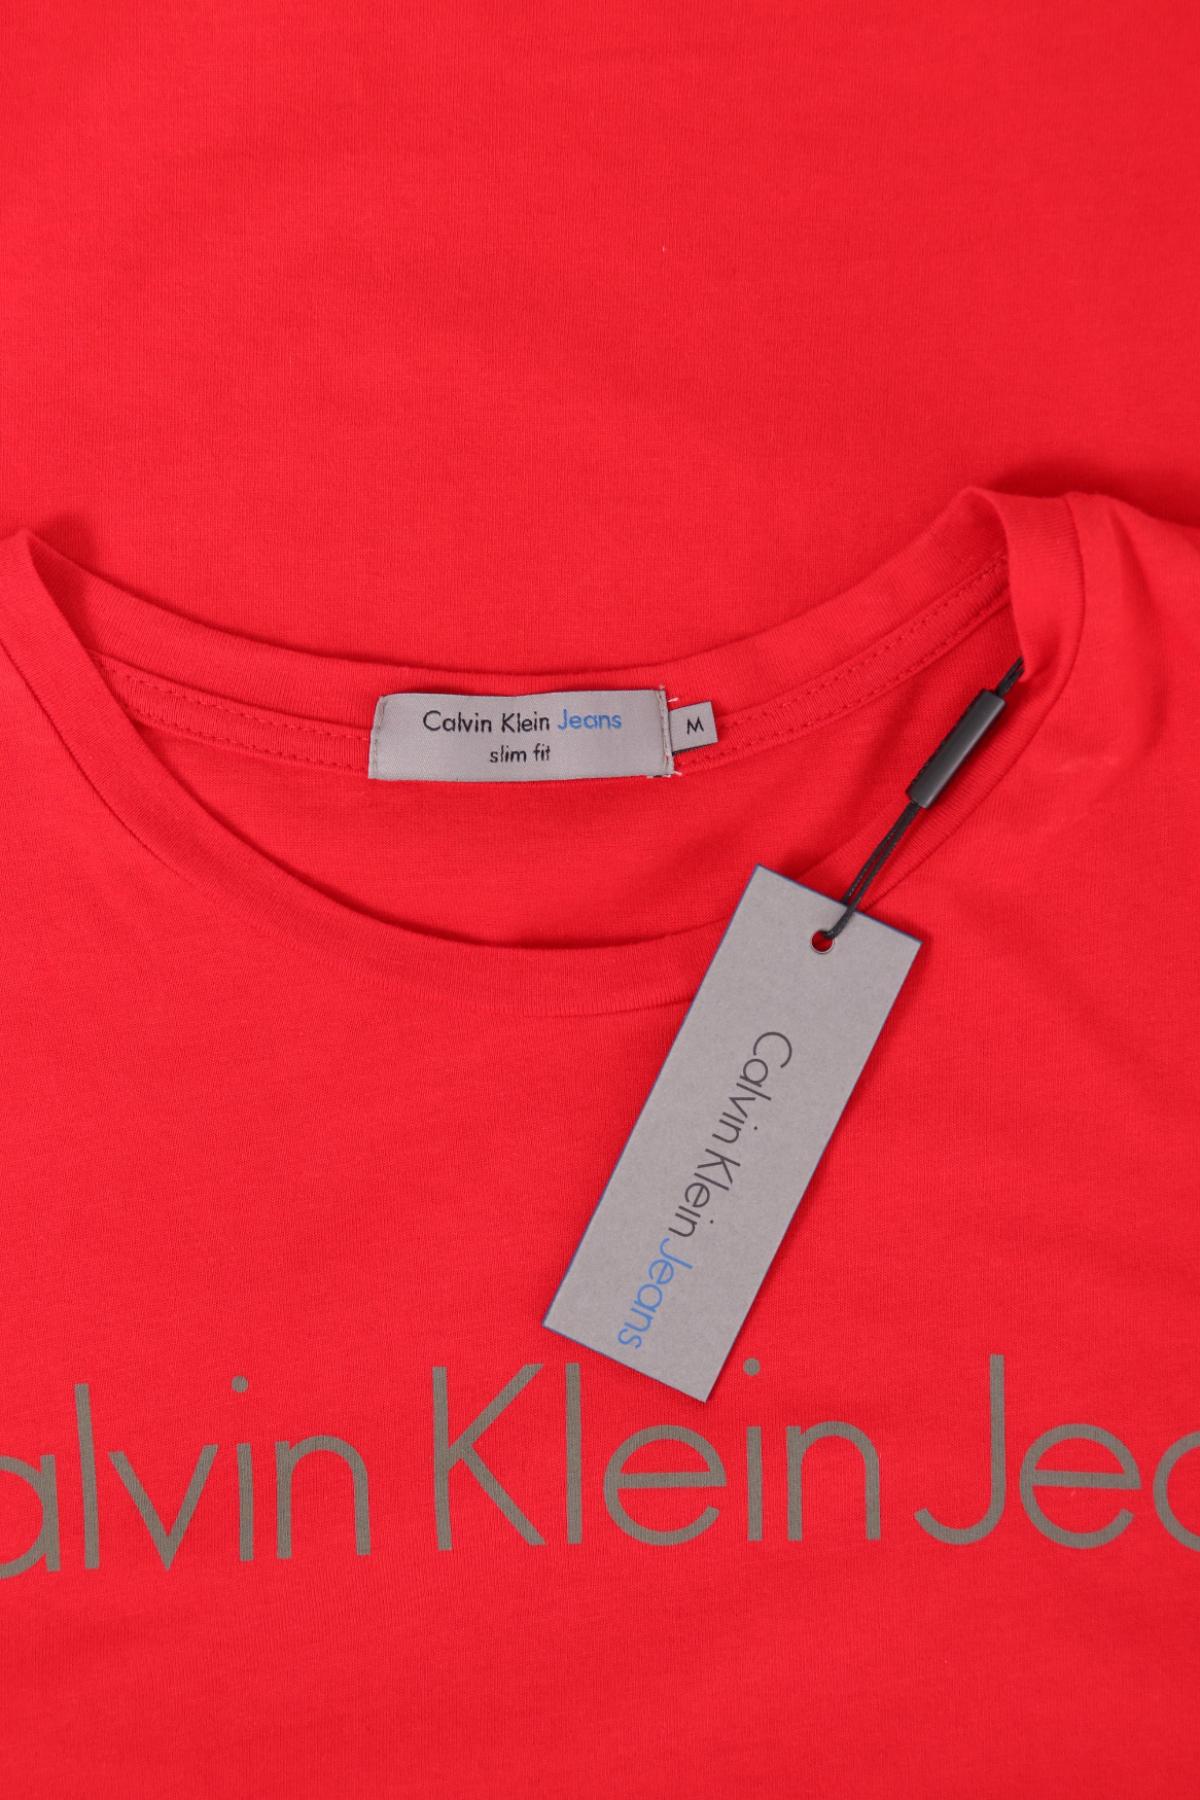 Тениска с щампа CALVIN KLEIN